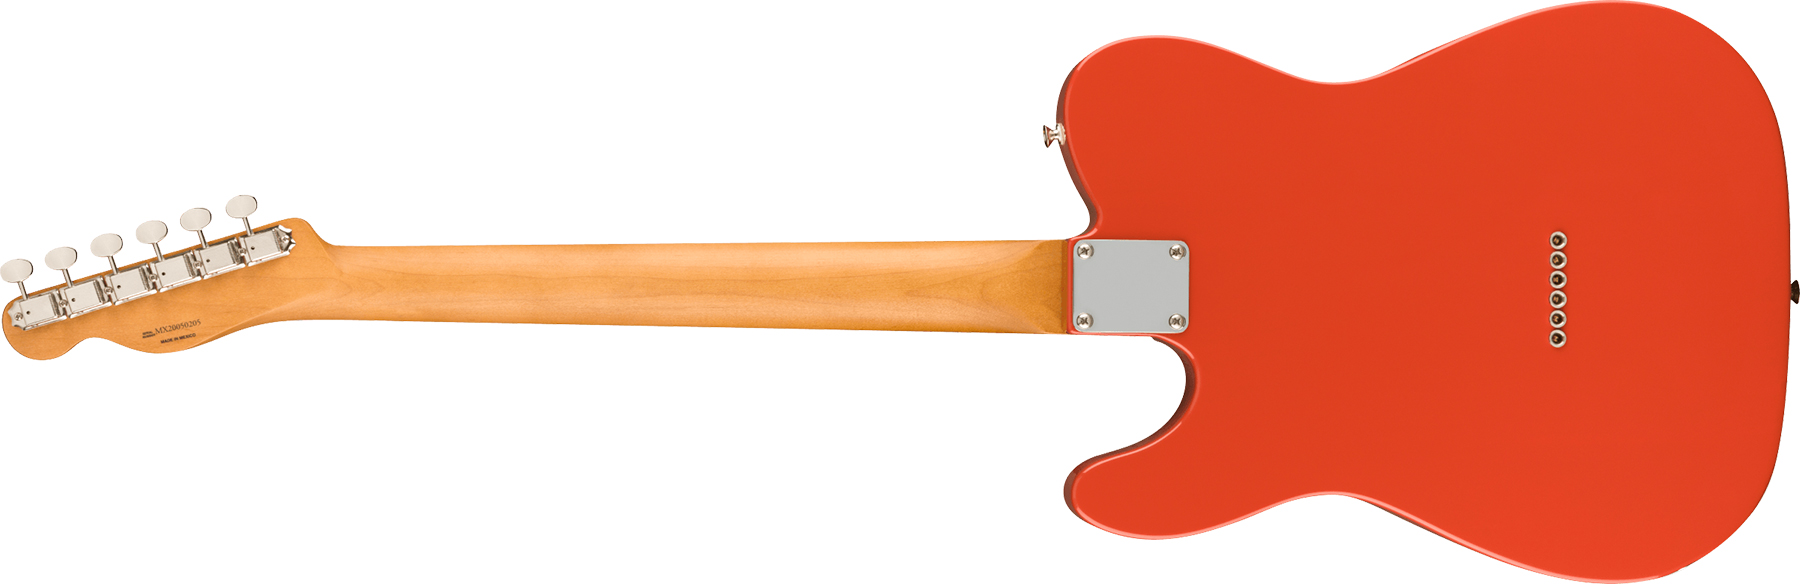 Fender Tele Noventa Mex Mn +housse - Fiesta Red - Guitarra eléctrica con forma de tel - Variation 1